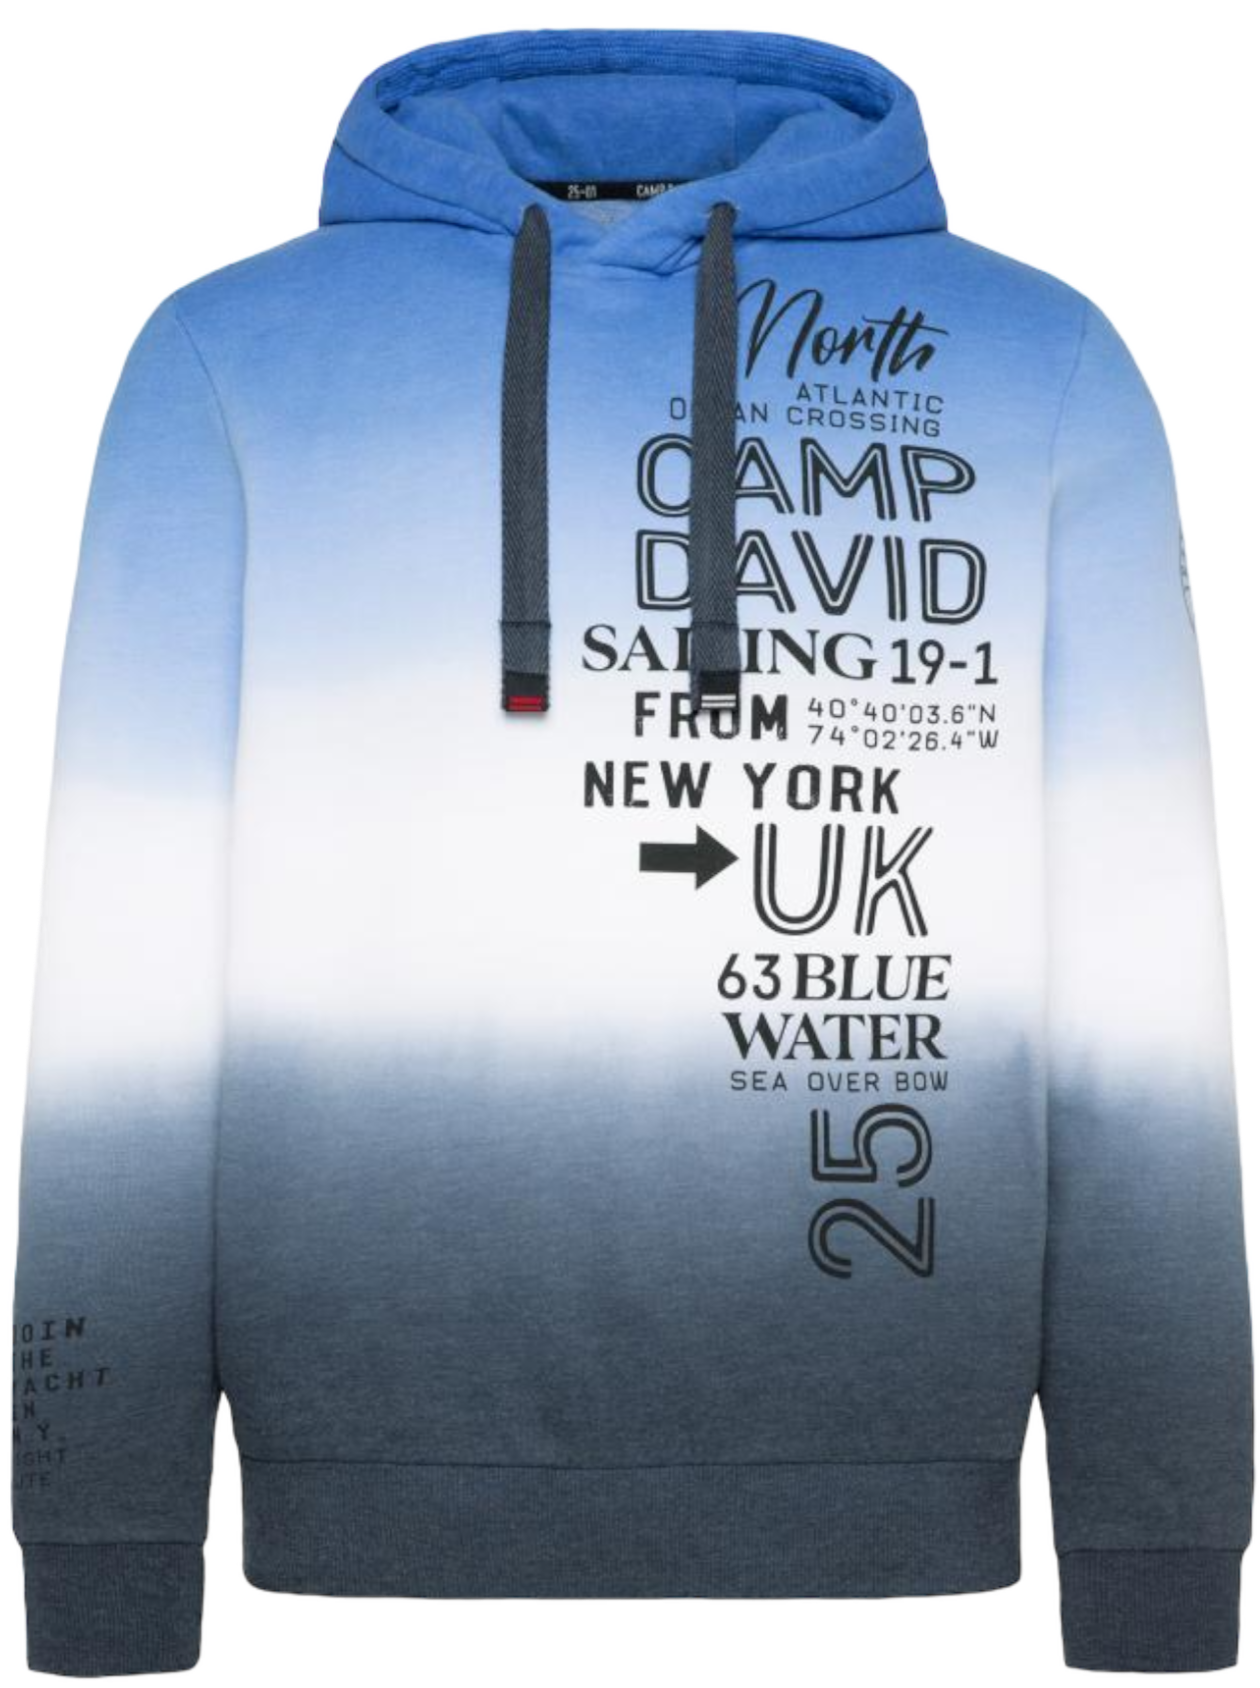 and - Cardigans Sweatshirts: Camp Versatility & Sweaters, Stateshop Quality David Fashion